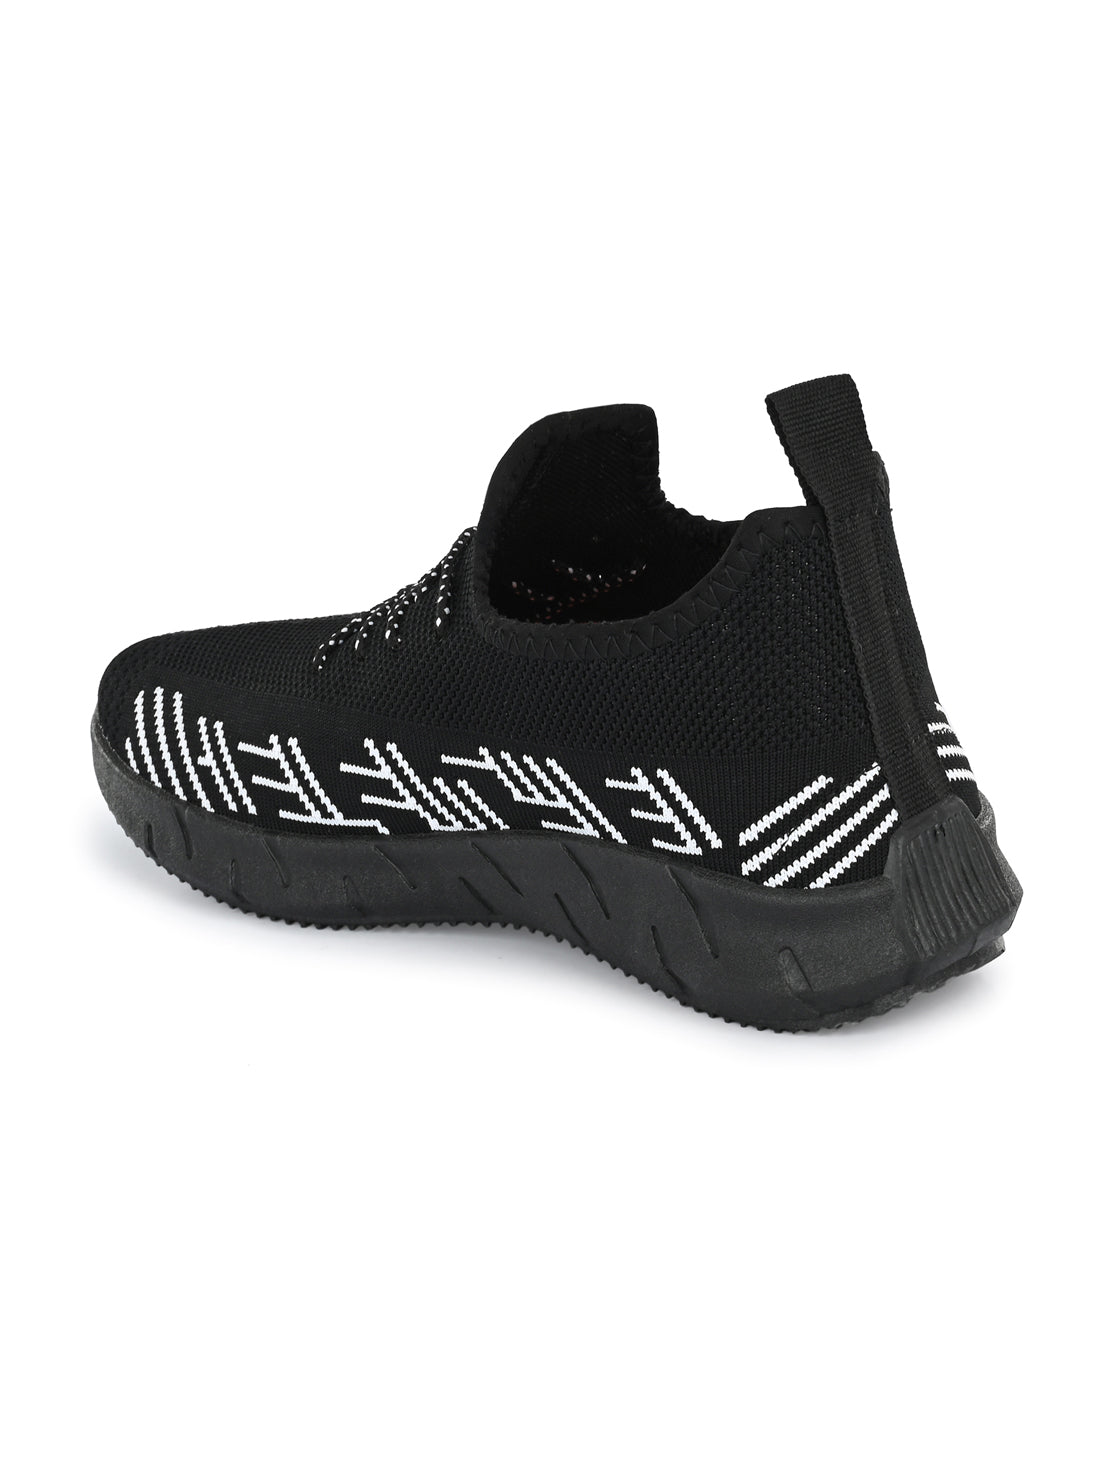 Hirolas® Men's Black Knitted Running/Walking/Gym Lace Up Sport Shoes (HRL2049BLK)